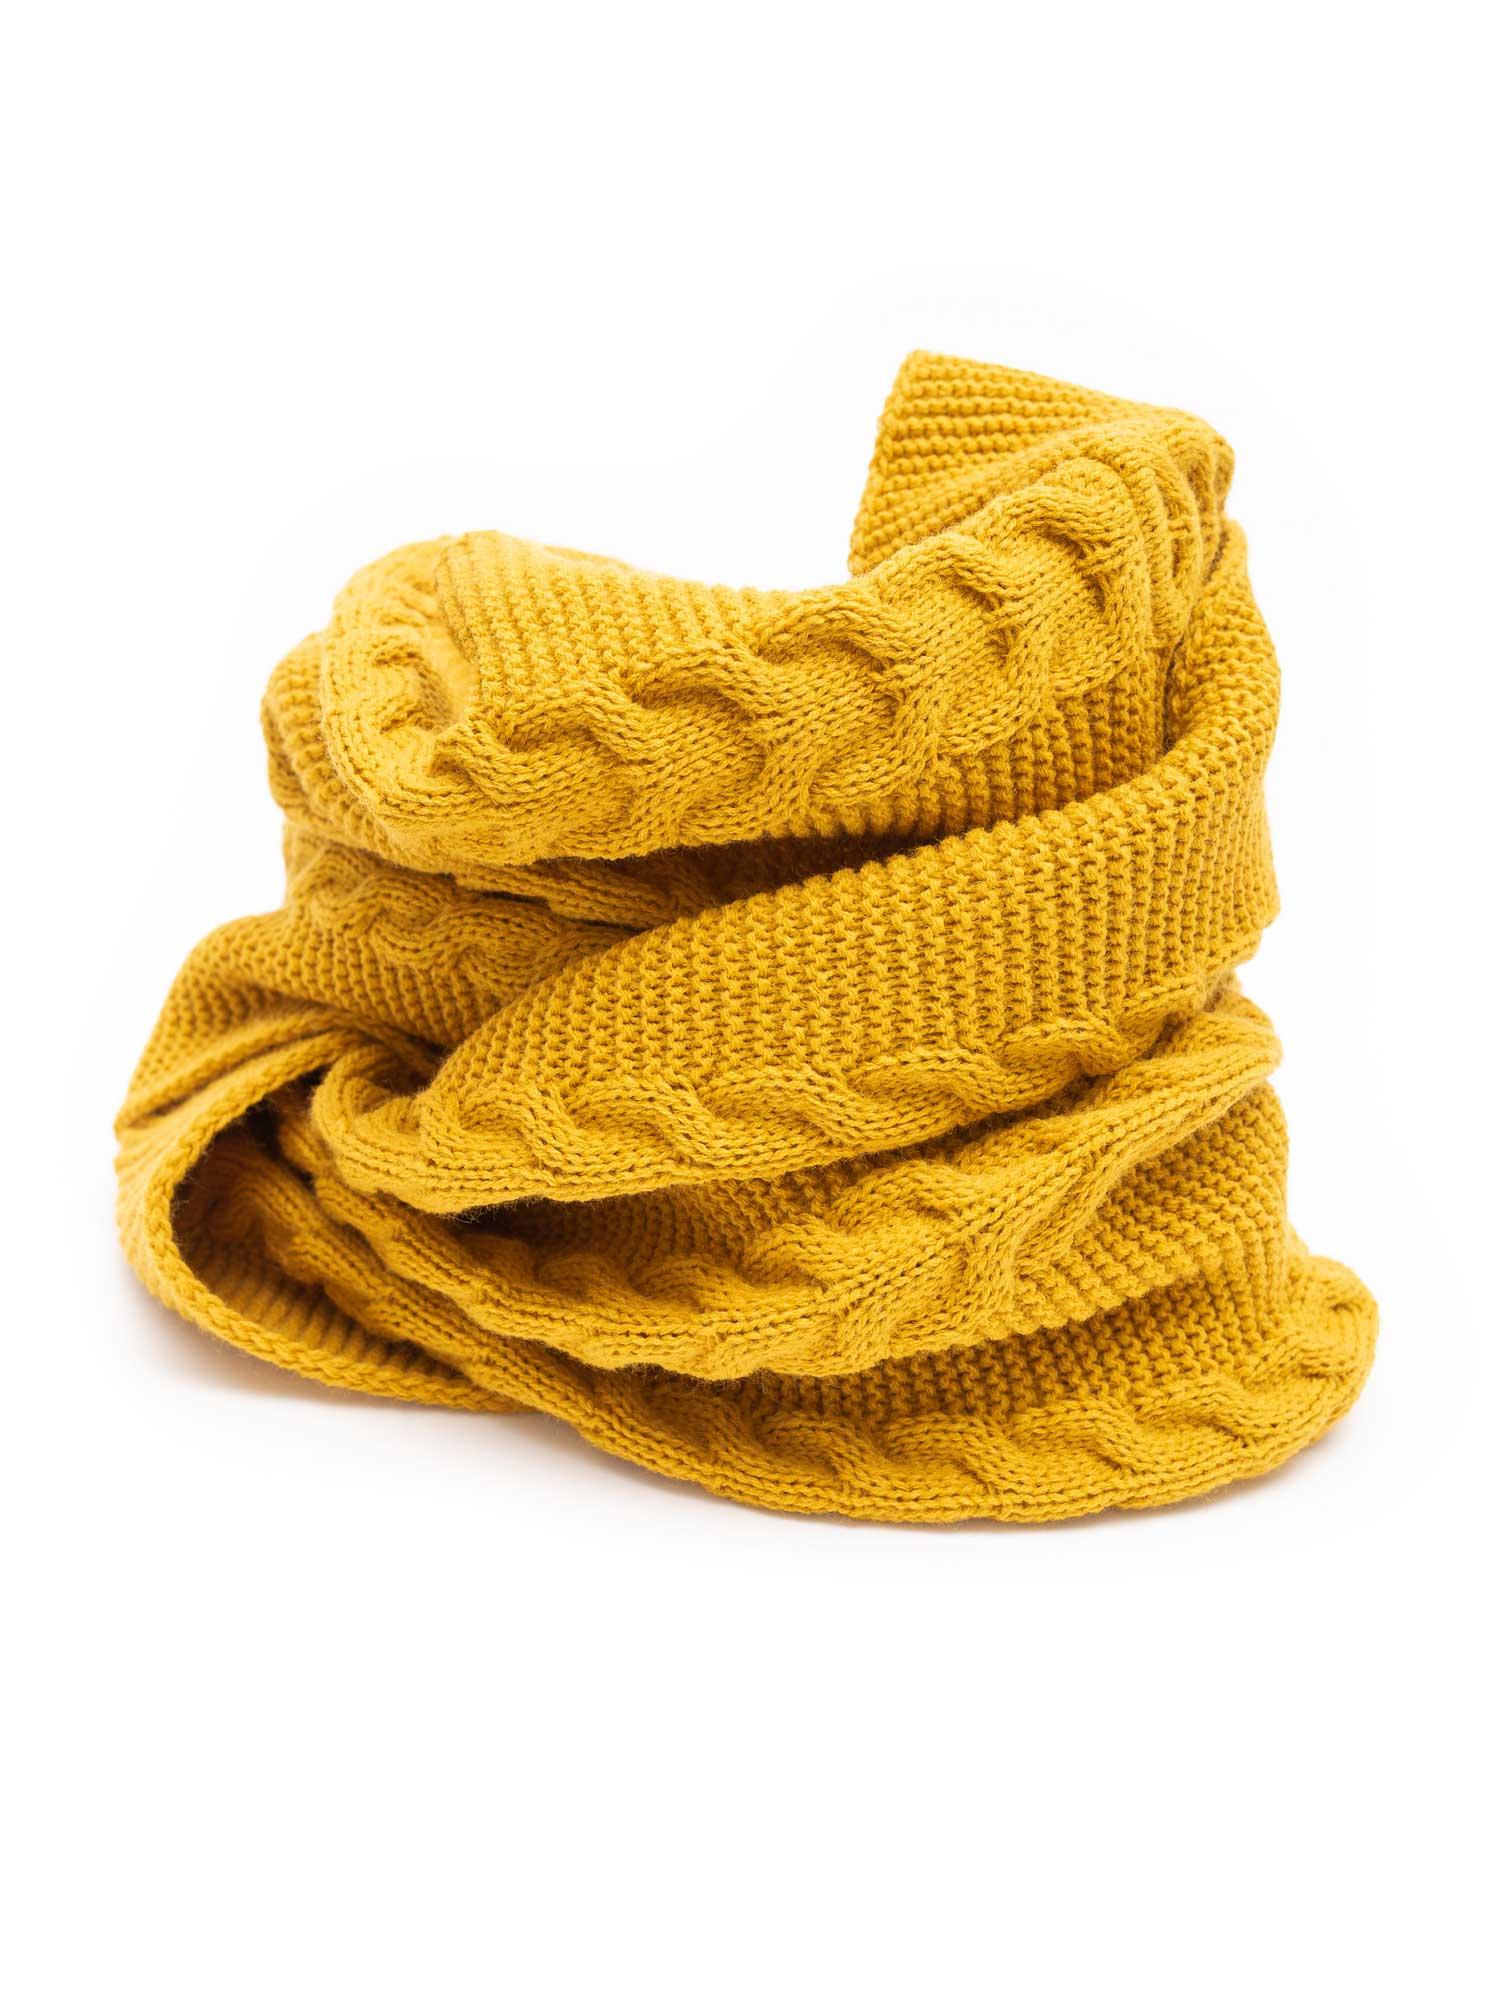 Selected image for BRILLE Women's scarf. ženski šal oker